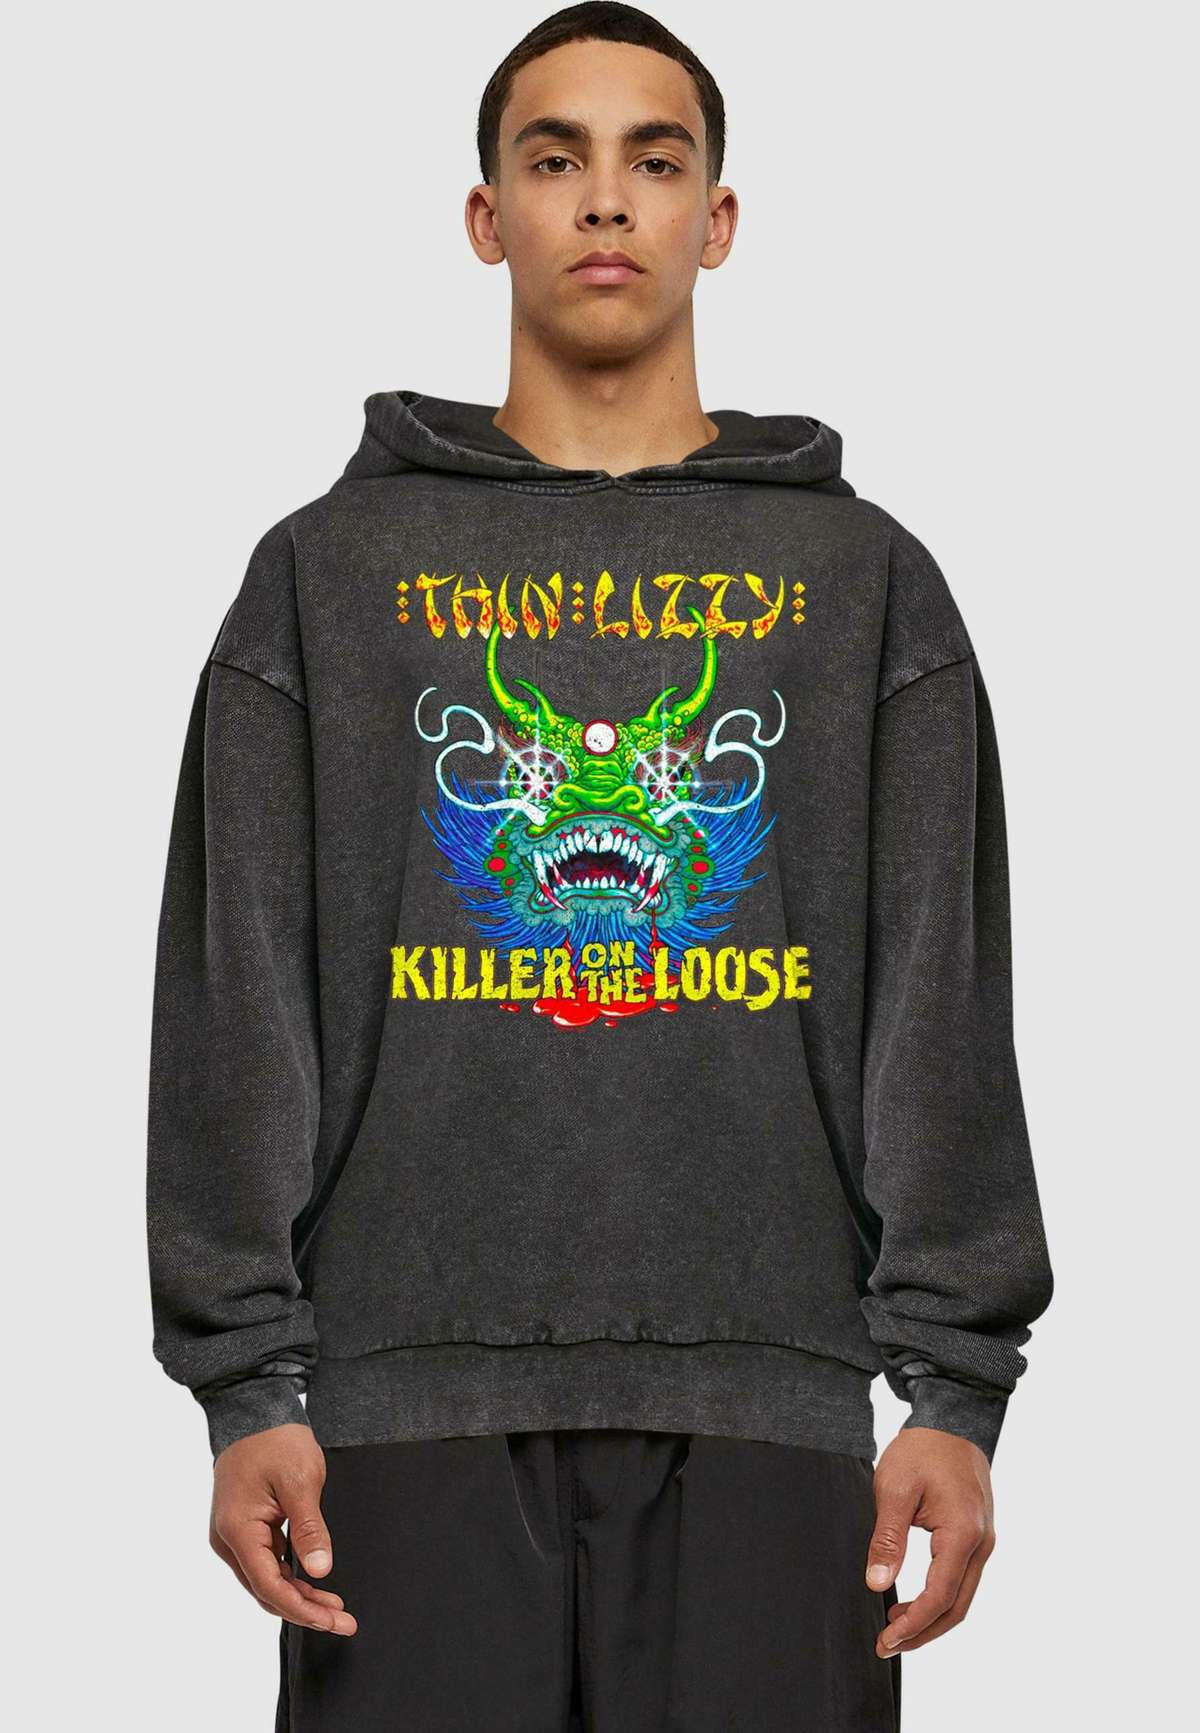 Пуловер THIN LIZZY KILLER COVER